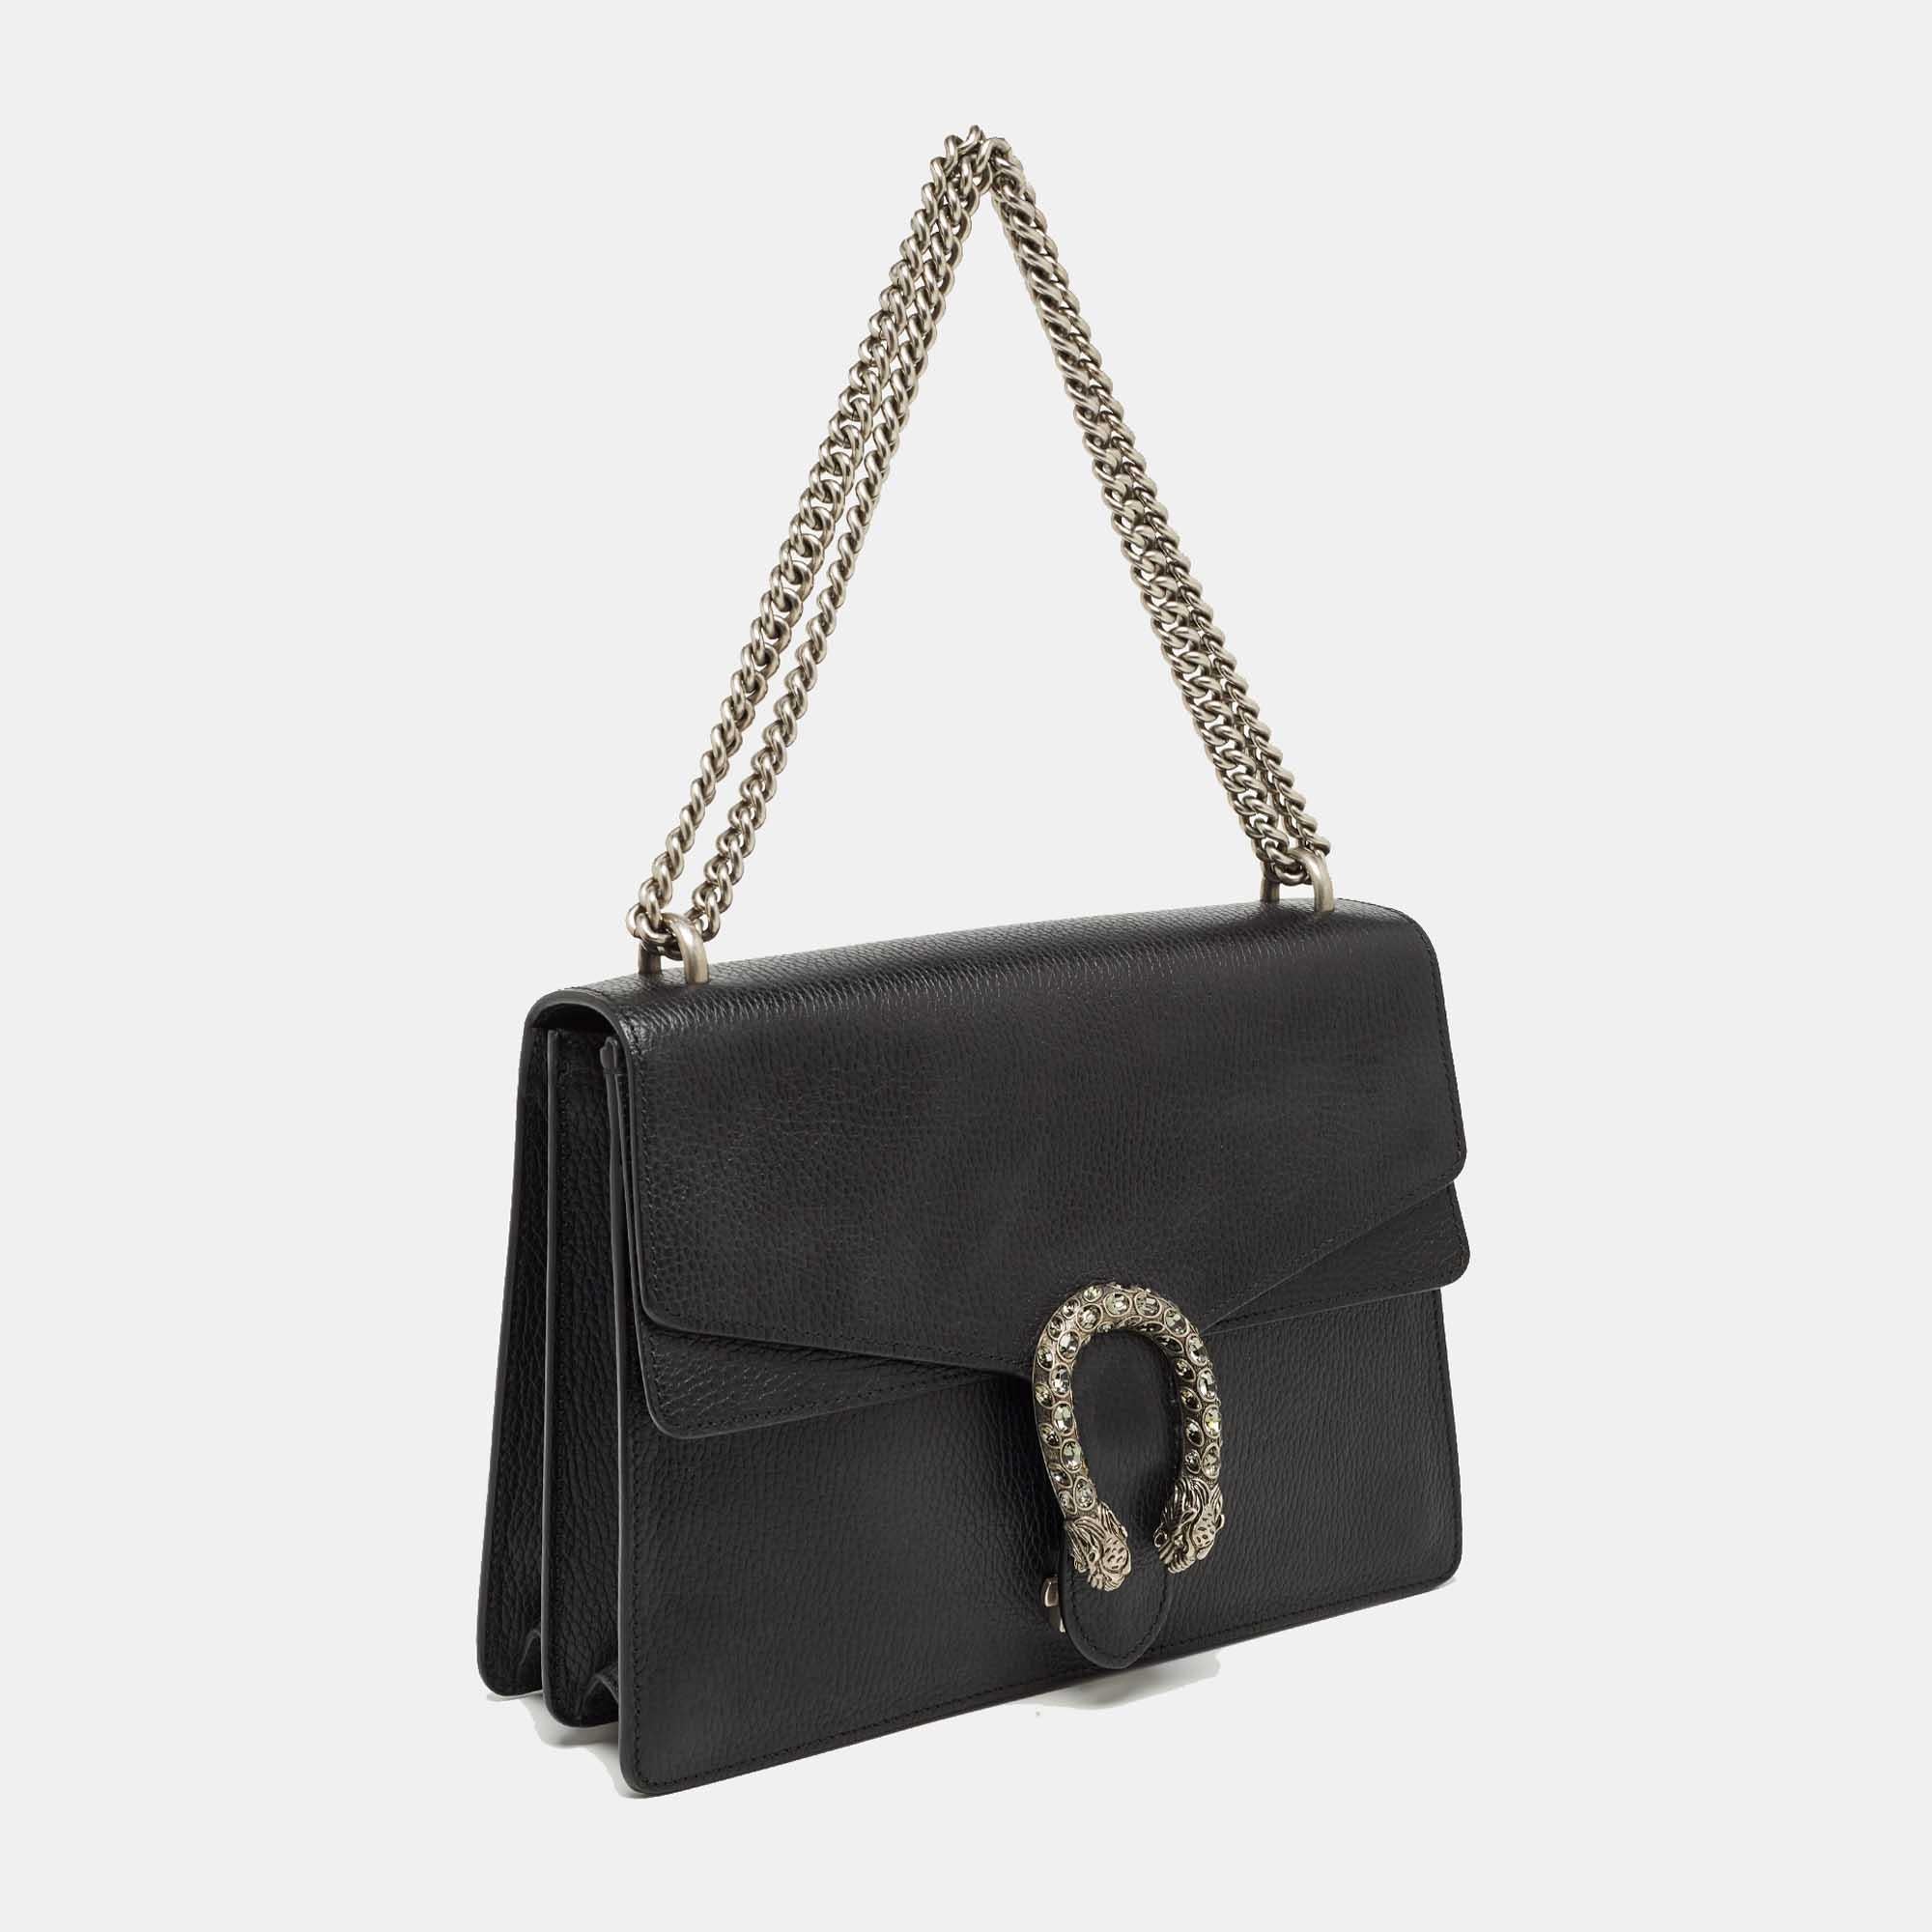 Gucci Black Leather Medium Dionysus Shoulder Bag 4